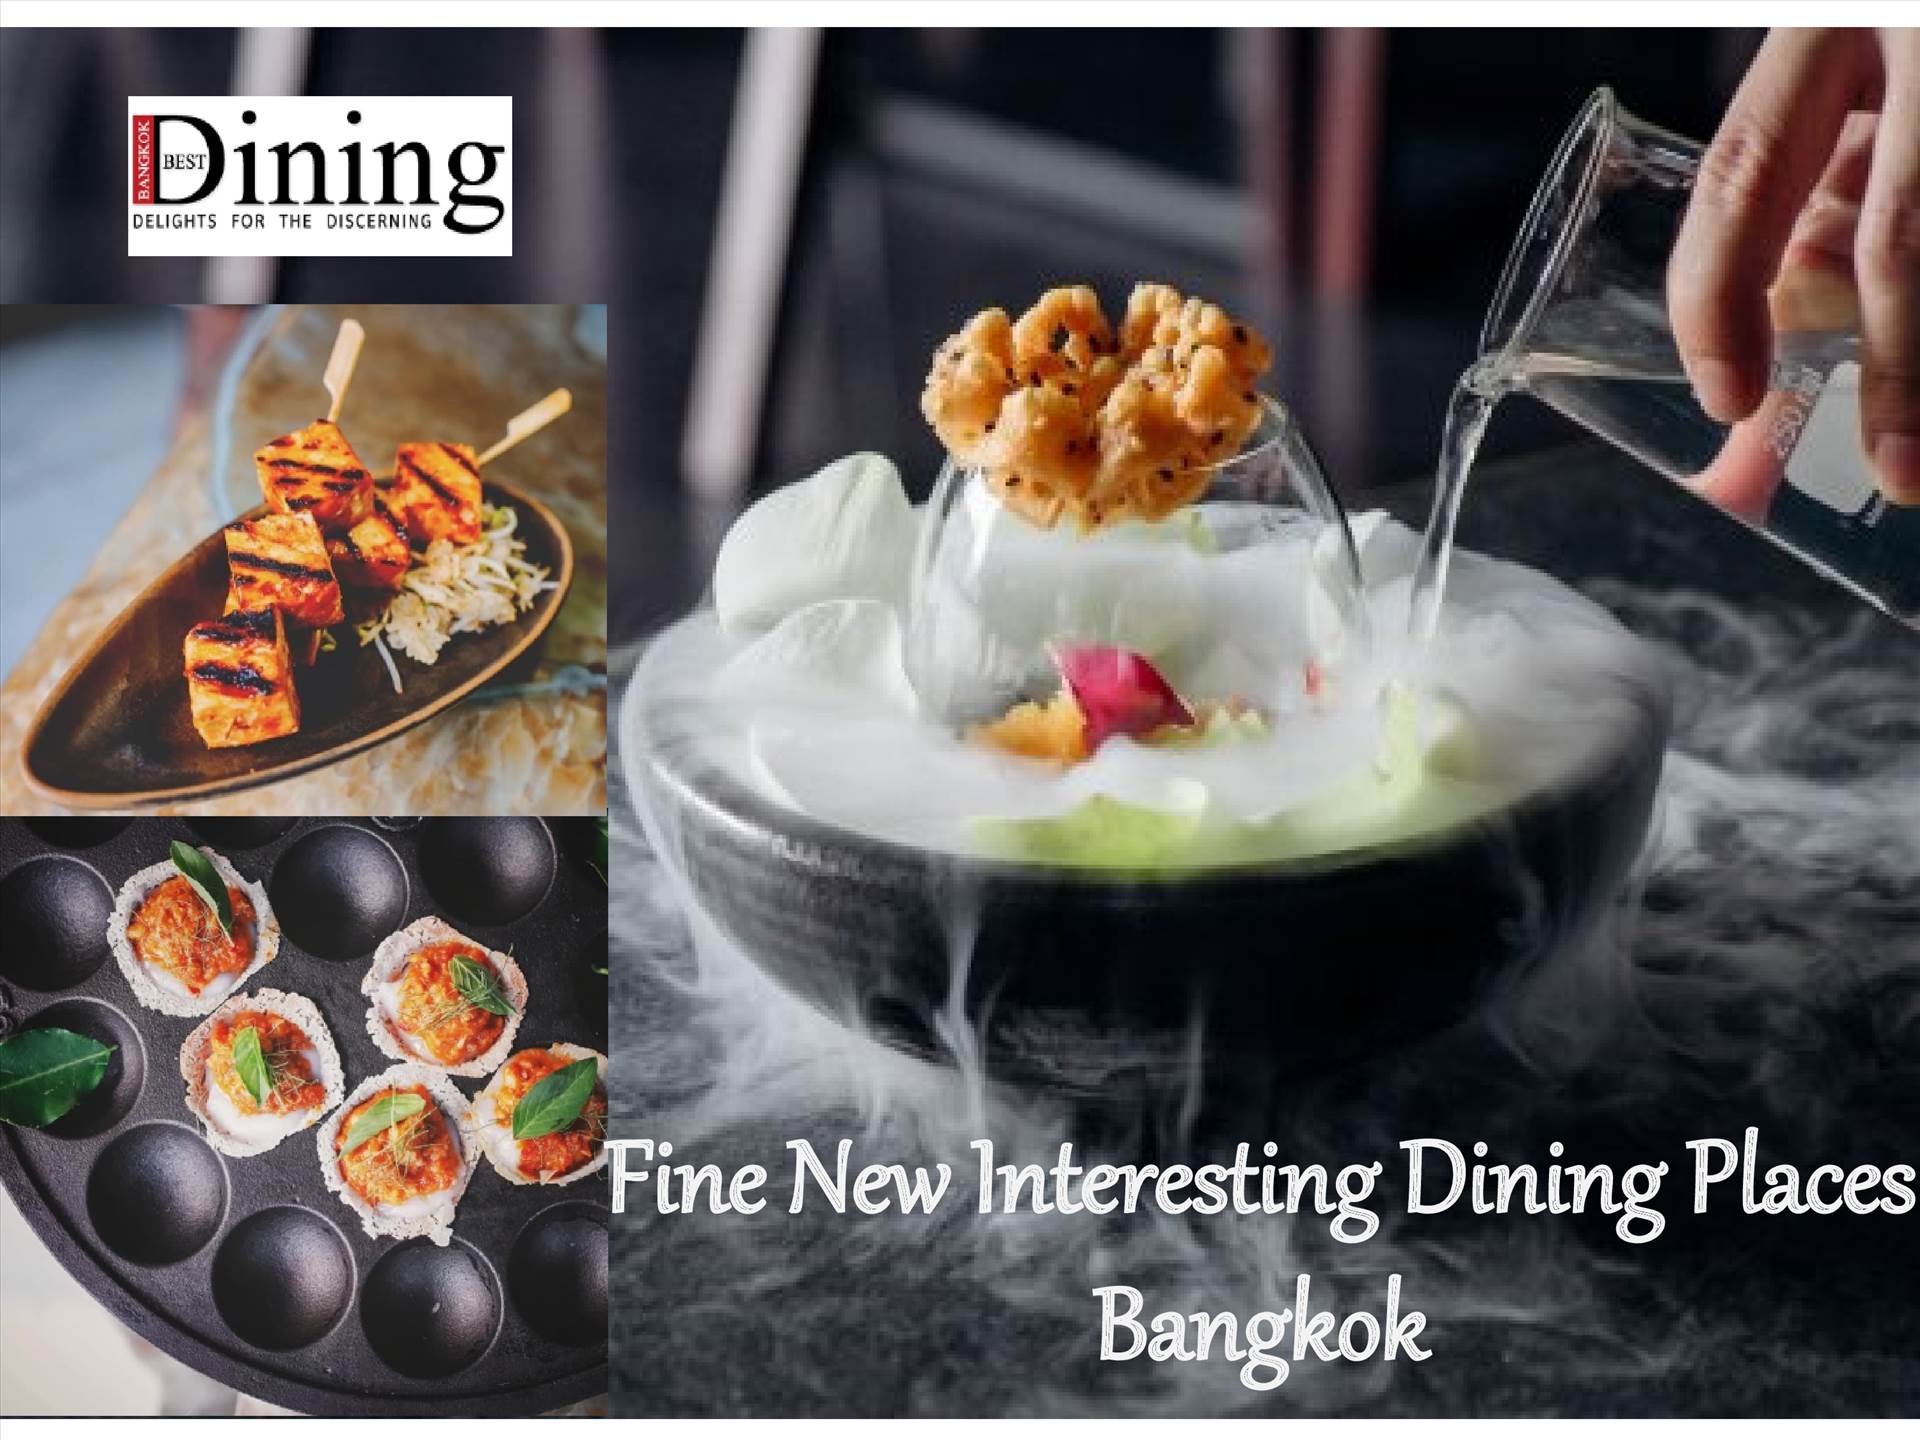 Dining in Bangkok_1.jpg  by bangkokbestdining